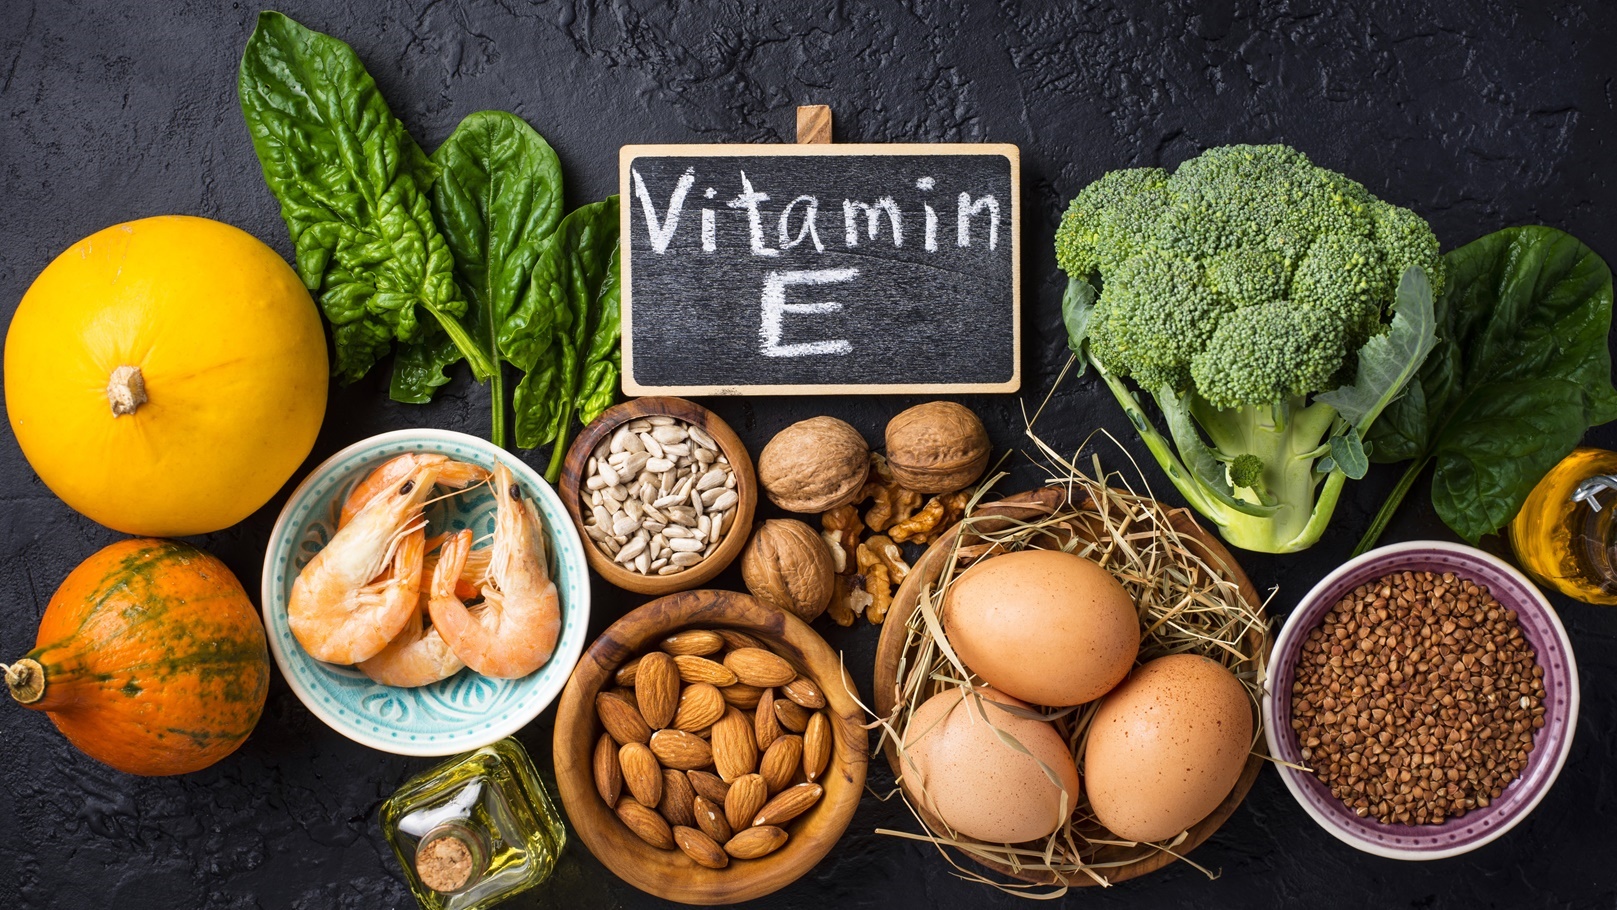 assortment-food-sources-of-vitamin-e-2021-08-27-09-35-57-utc